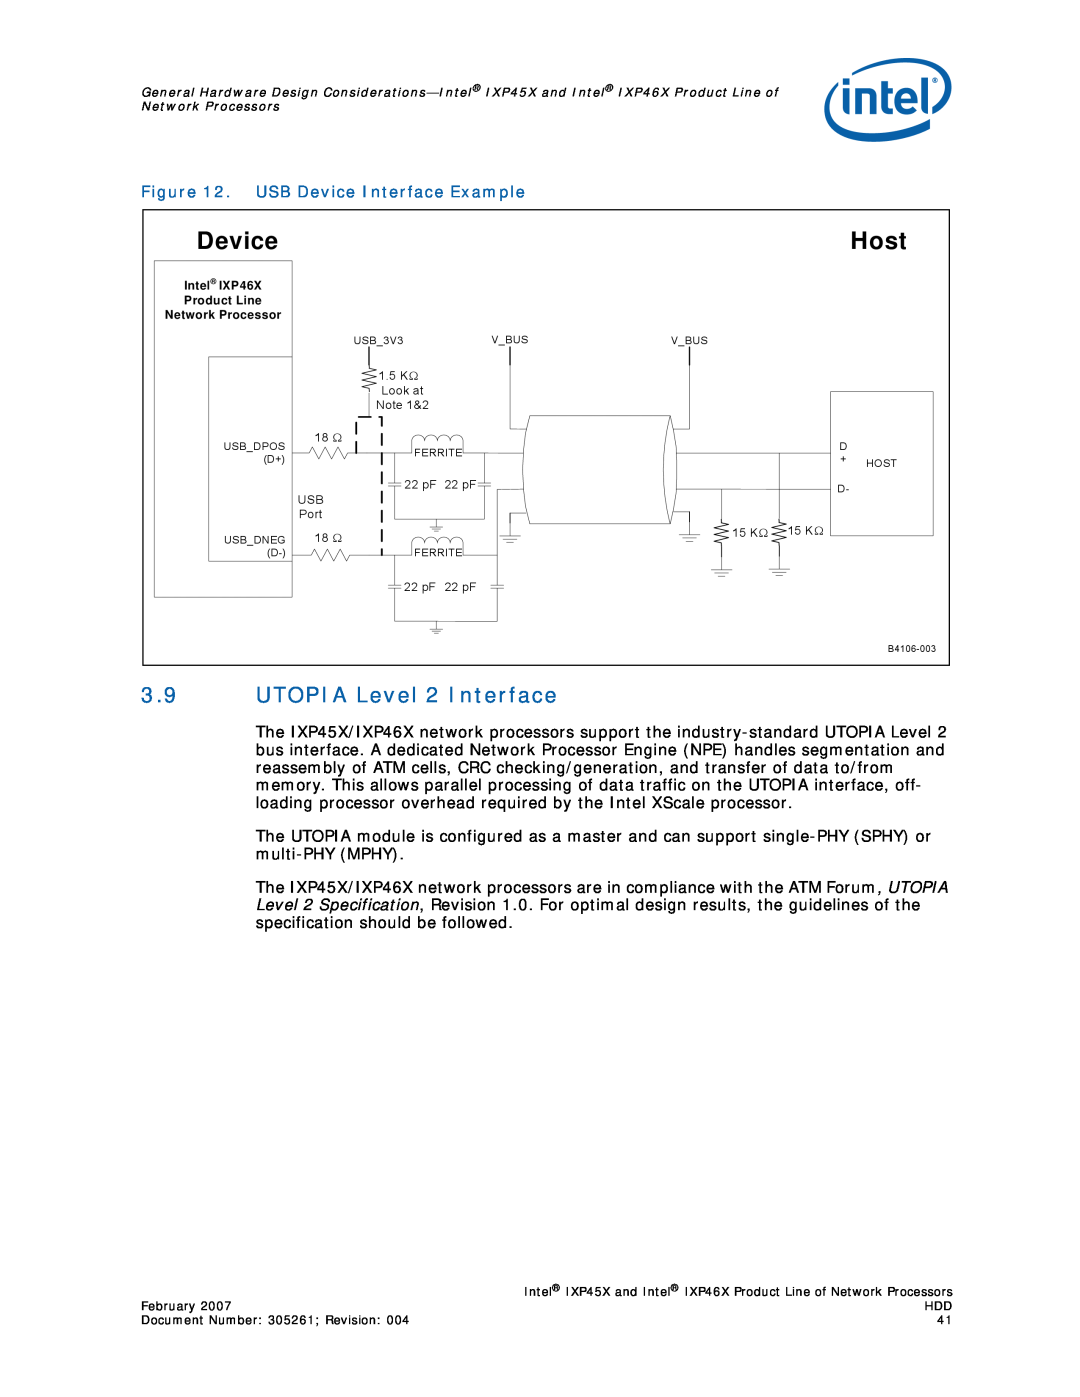 Intel IXP45X, IXP46X manual 3.9UTOPIA Level 2 Interface, USB Device Interface Example, Host 